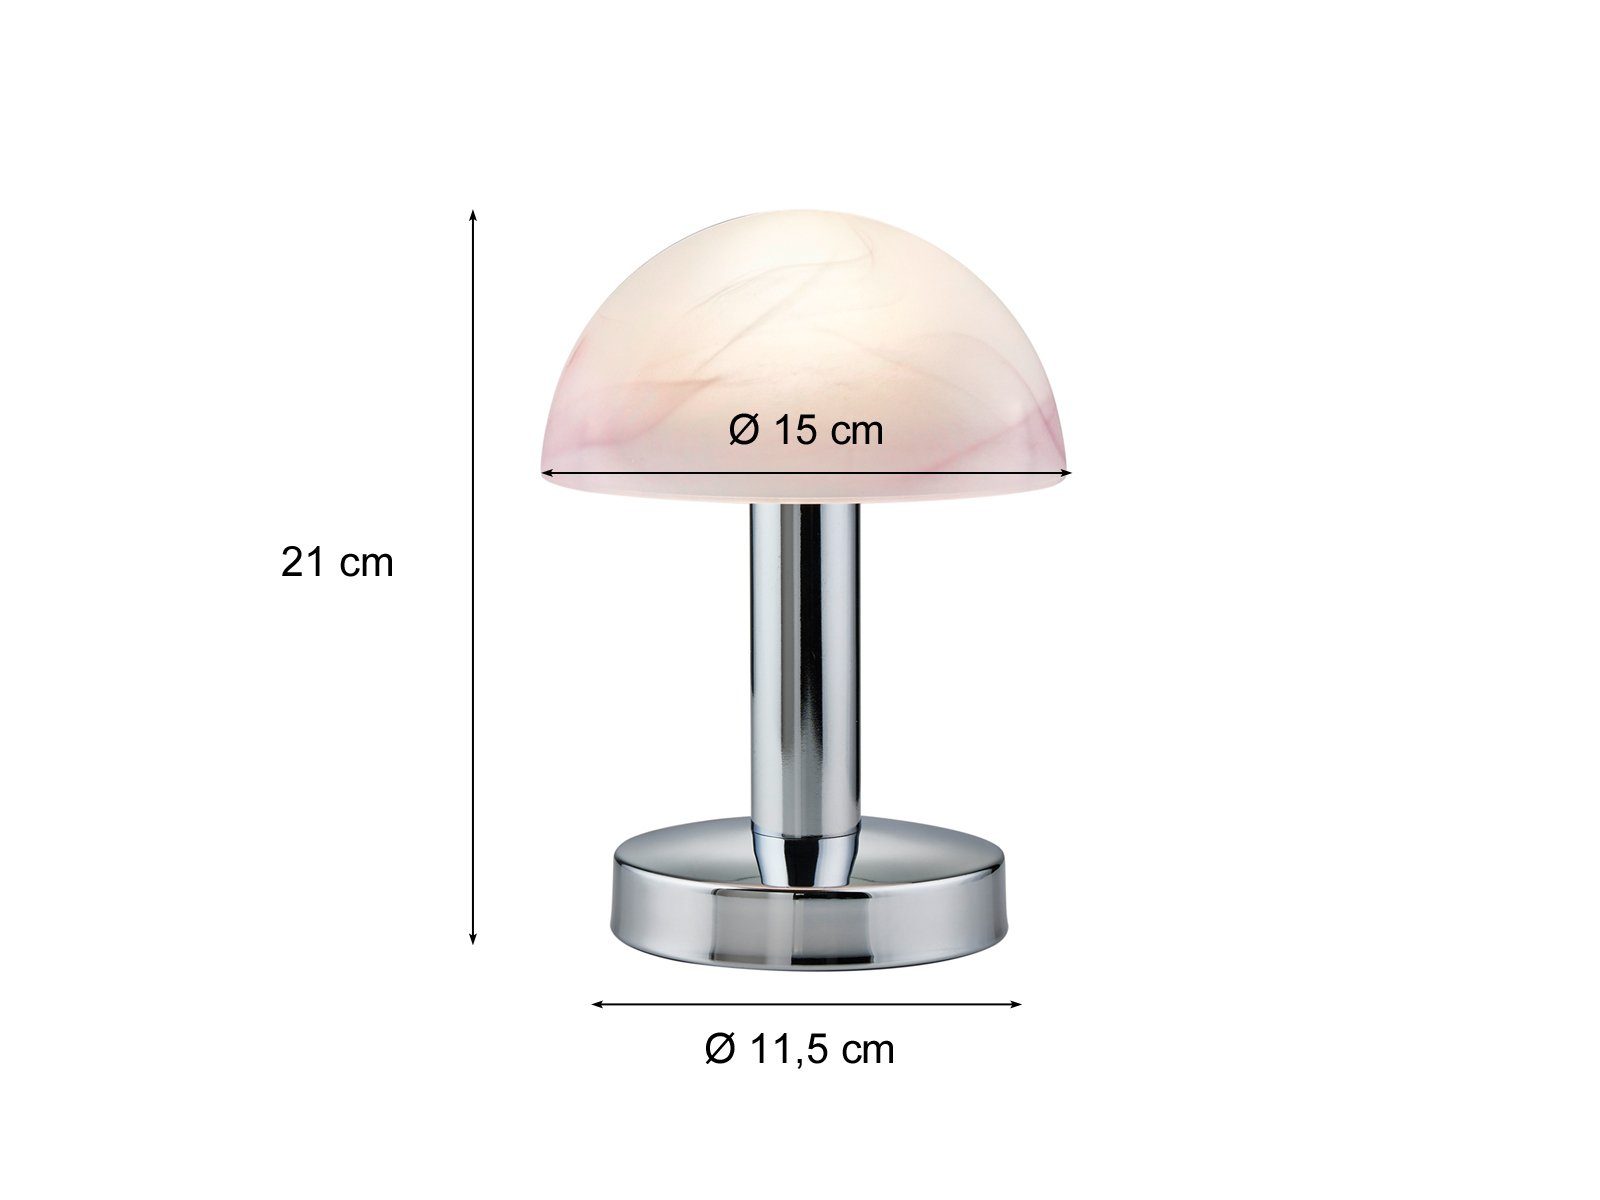 meineWunschleuchte LED wechselbar, Höhe Pilz-lampe Lila-Weiß Chrom matt Touch dimmbar 21cm LED klein-e Design, / Warmweiß, Dimmfunktion, Nachttischlampe, Nachttisch-lampe